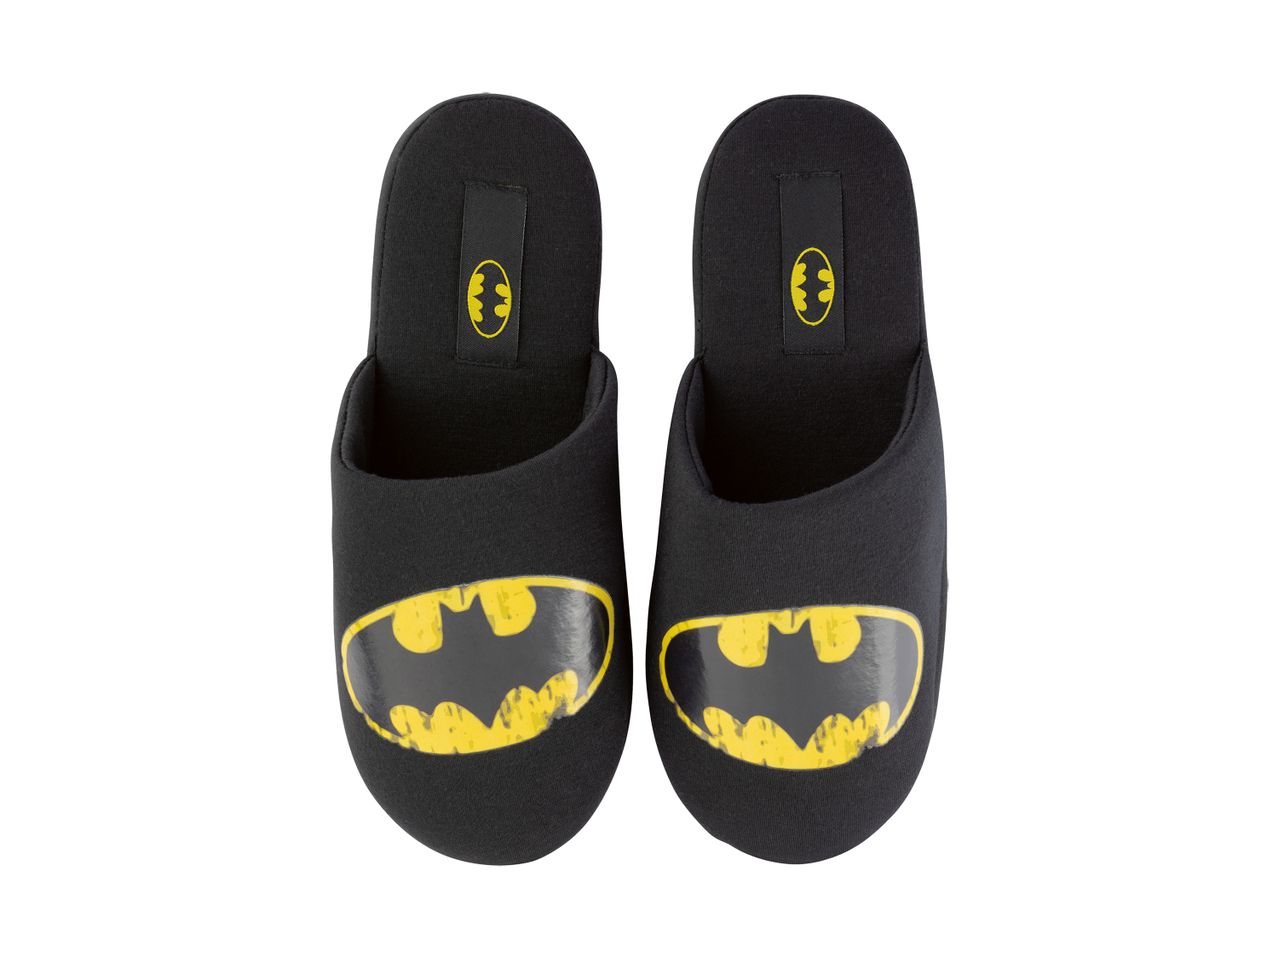 Pantofole da uomo Batman, Star Wars, , prezzo 5.99 EUR